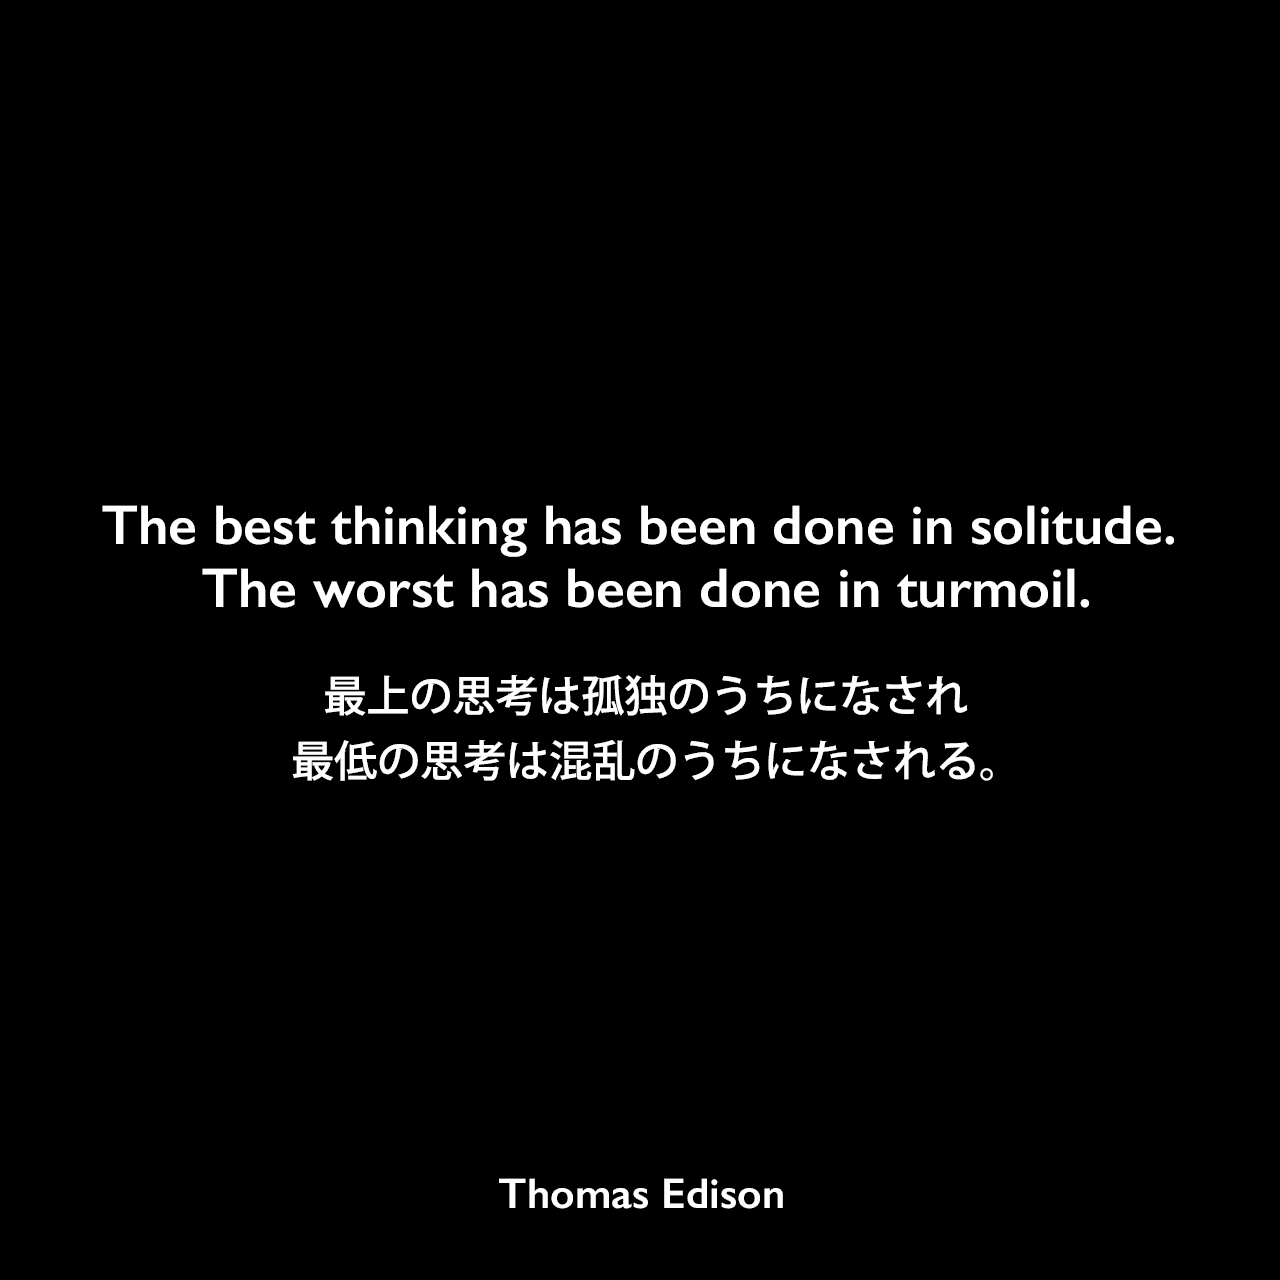 The best thinking has been done in solitude. The worst has been done in turmoil.最上の思考は孤独のうちになされ、最低の思考は混乱のうちになされる。Thomas Edison